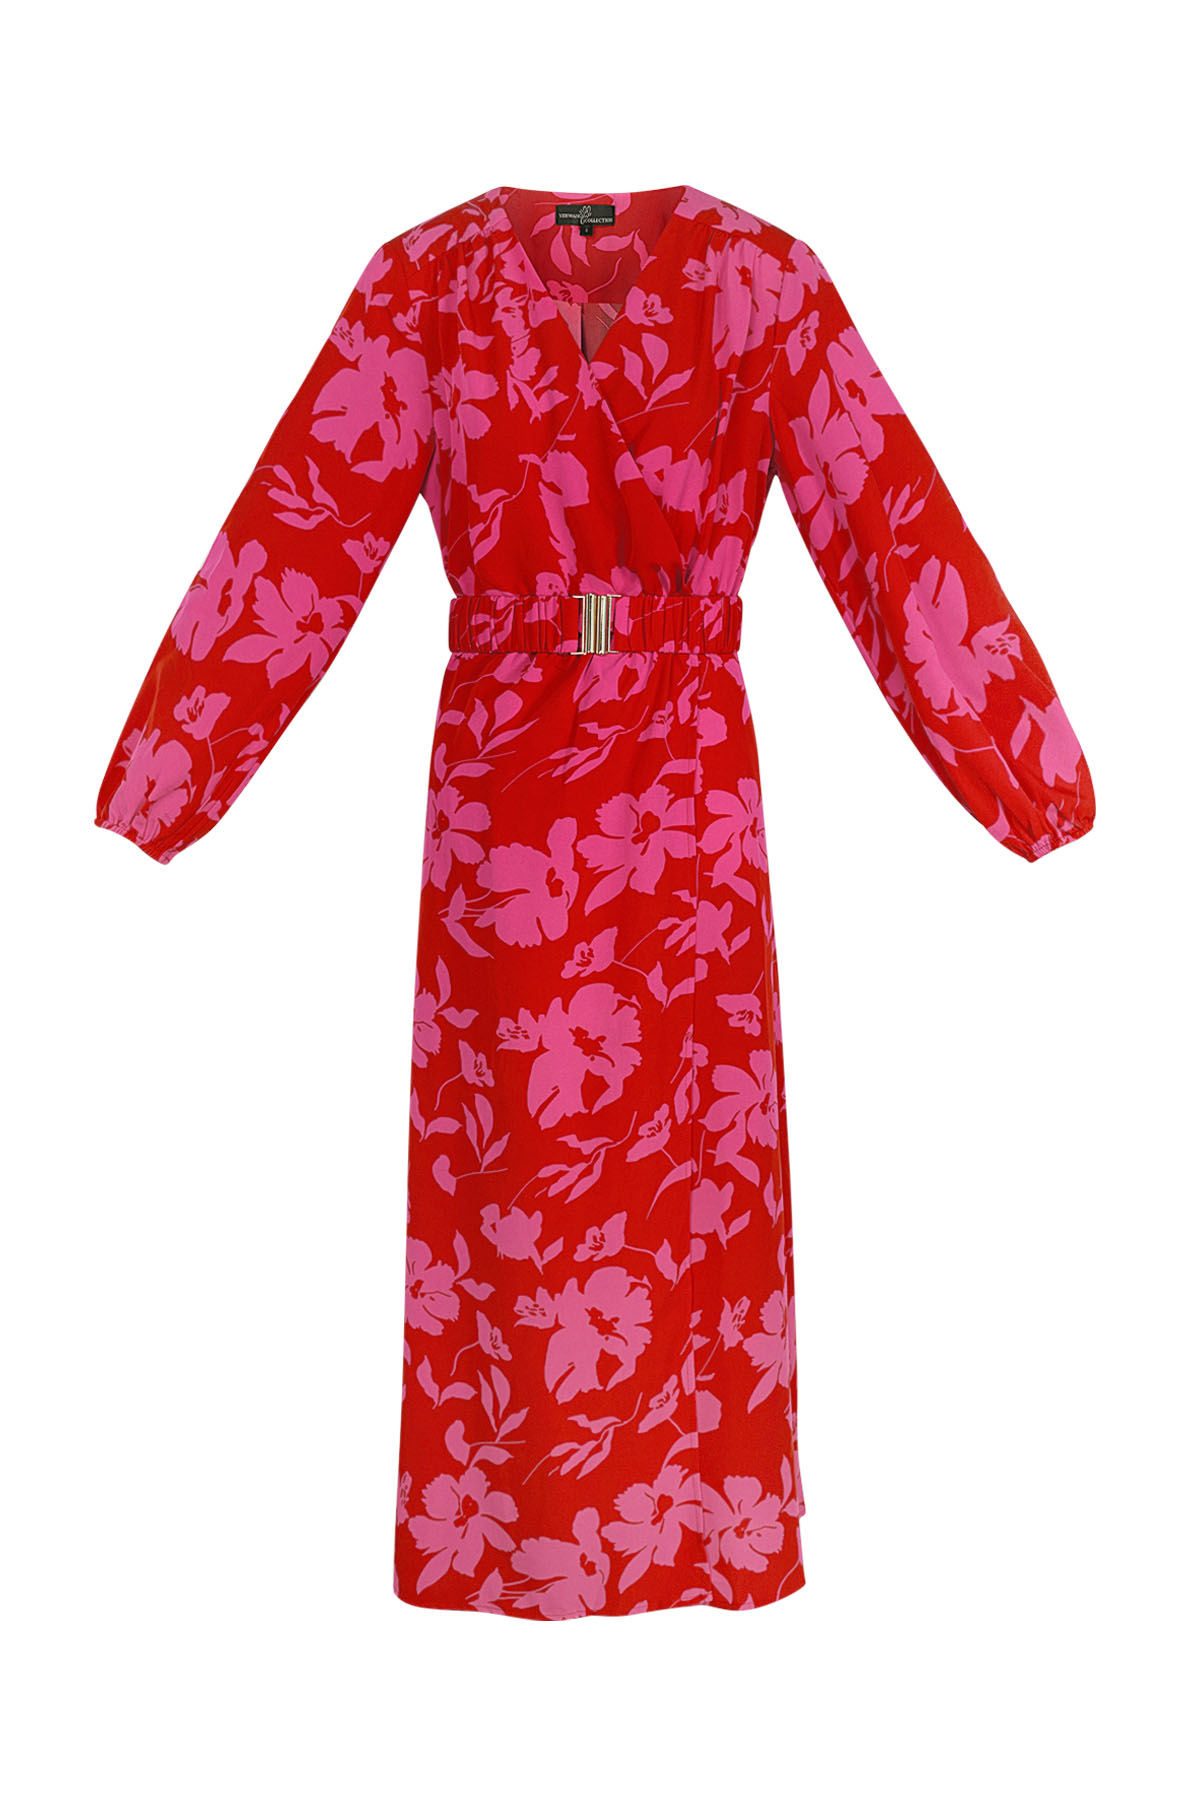 Maxi dress floral print pink red